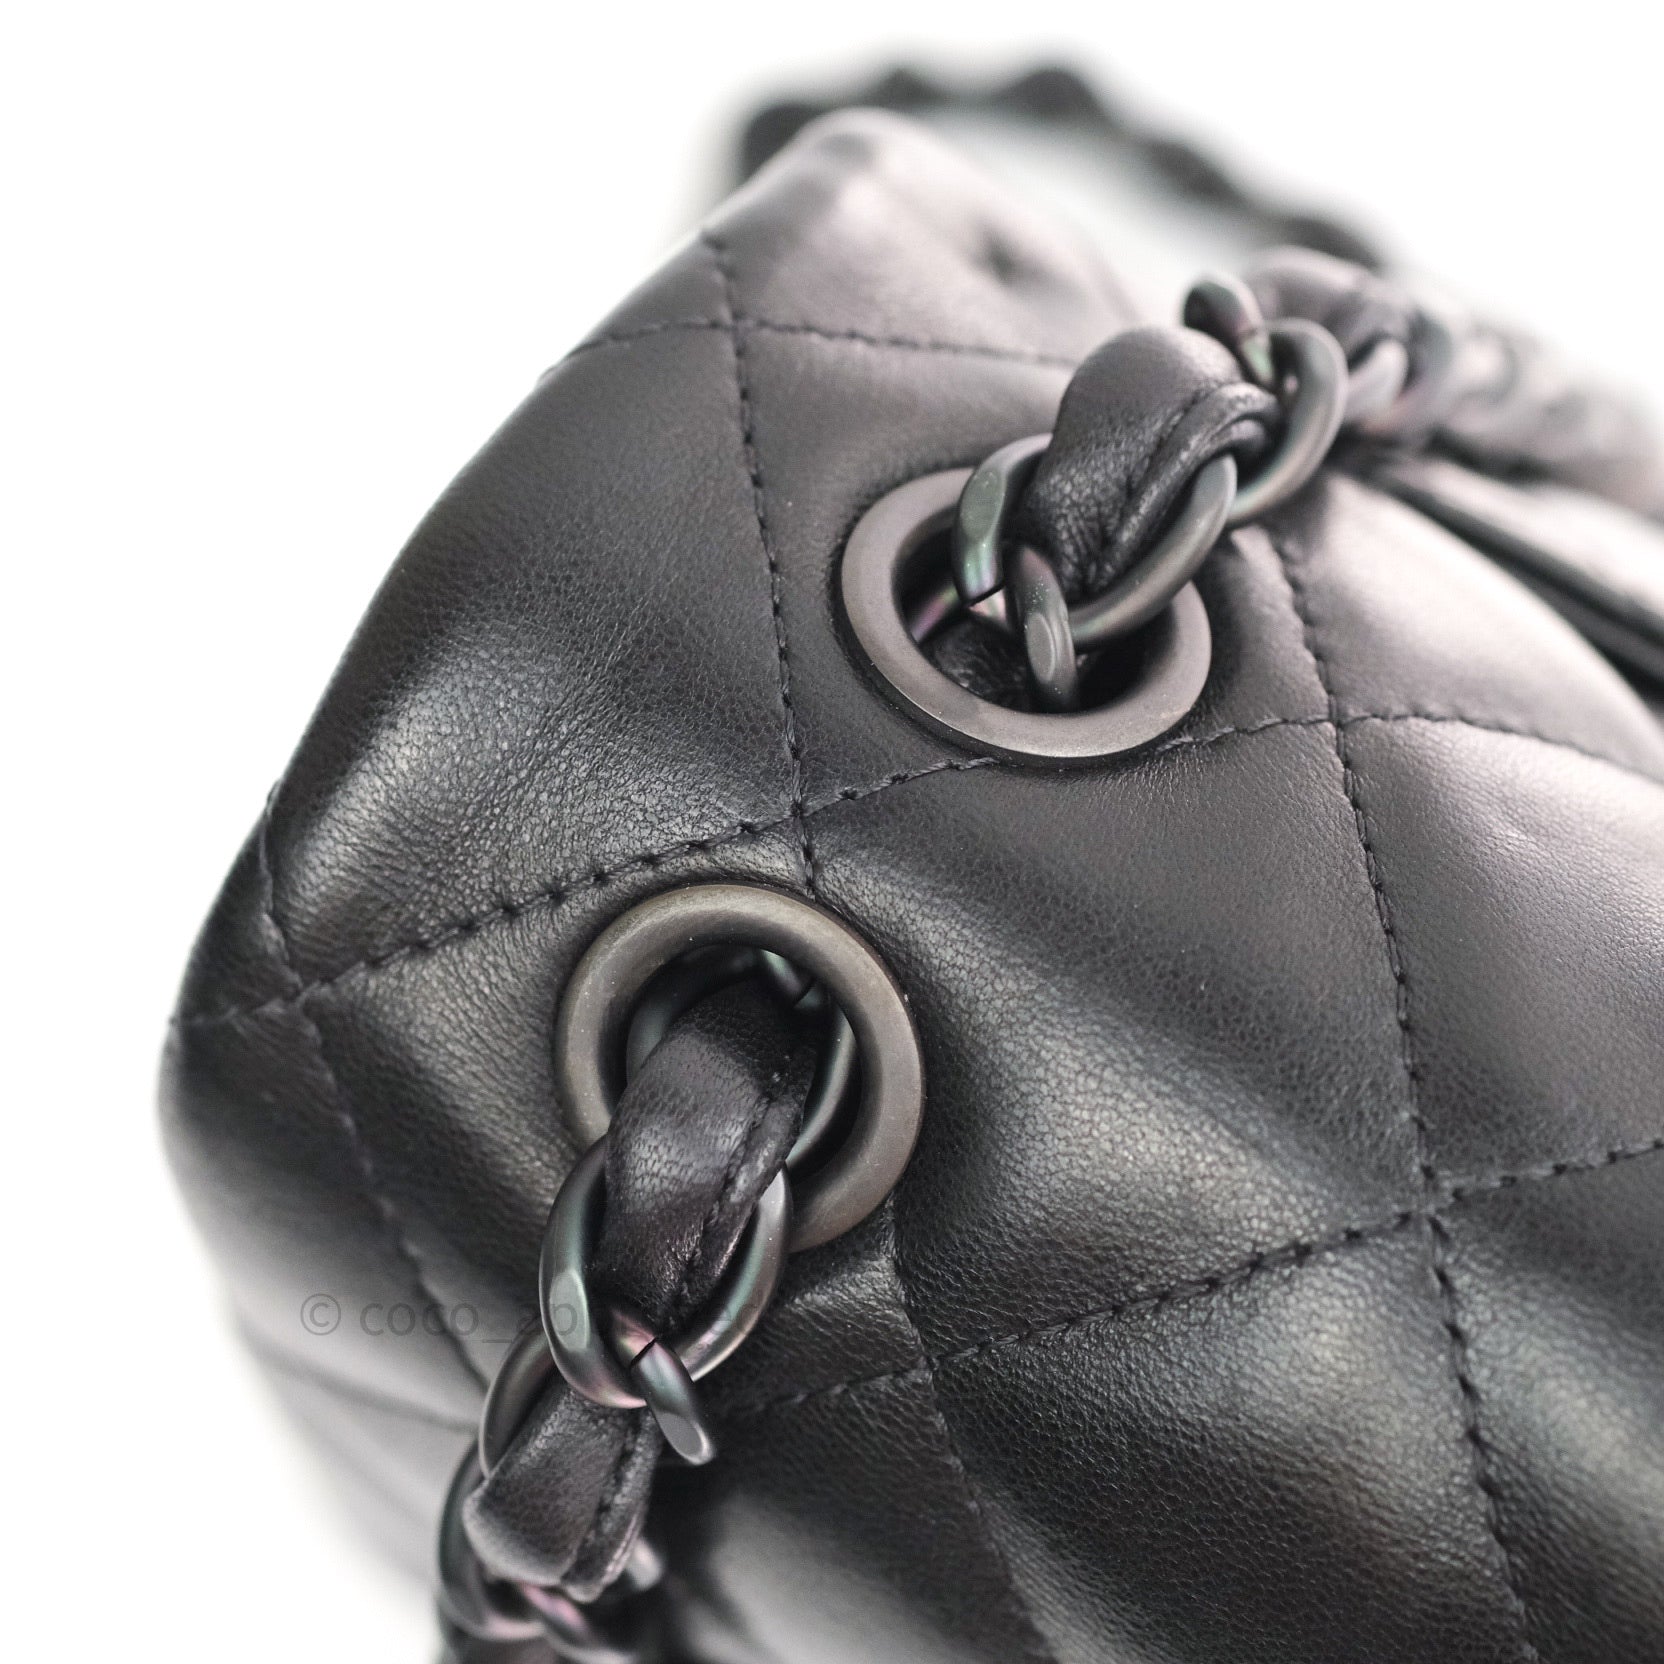 Chanel Jumbo Double Flap Black Lambskin Silver Hardware⁣⁣ – Coco Approved  Studio